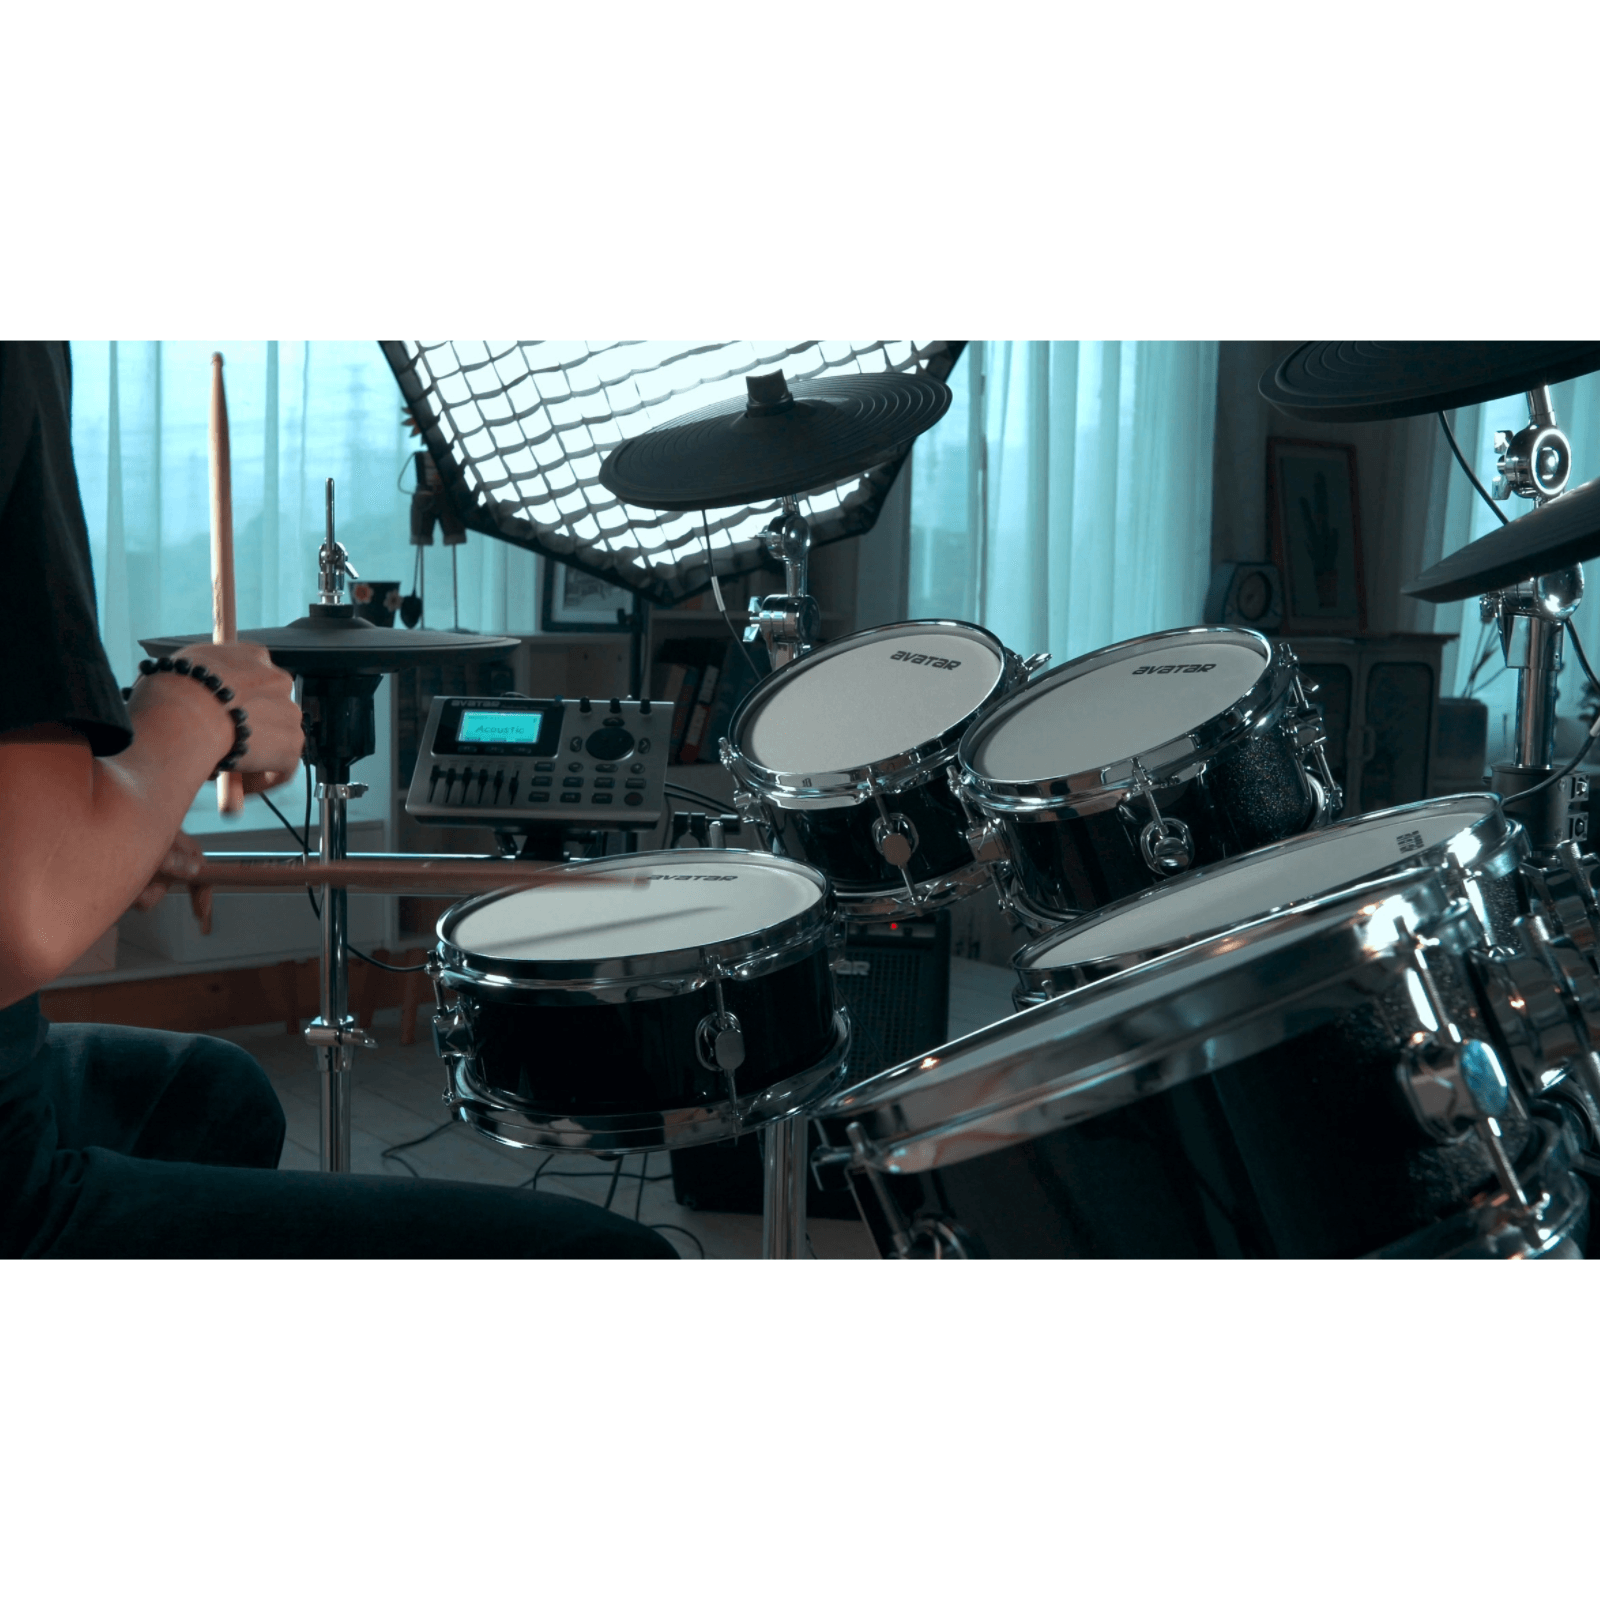 Avatar SD301-2SH Digital Drumkit Set | AVATAR , Zoso Music